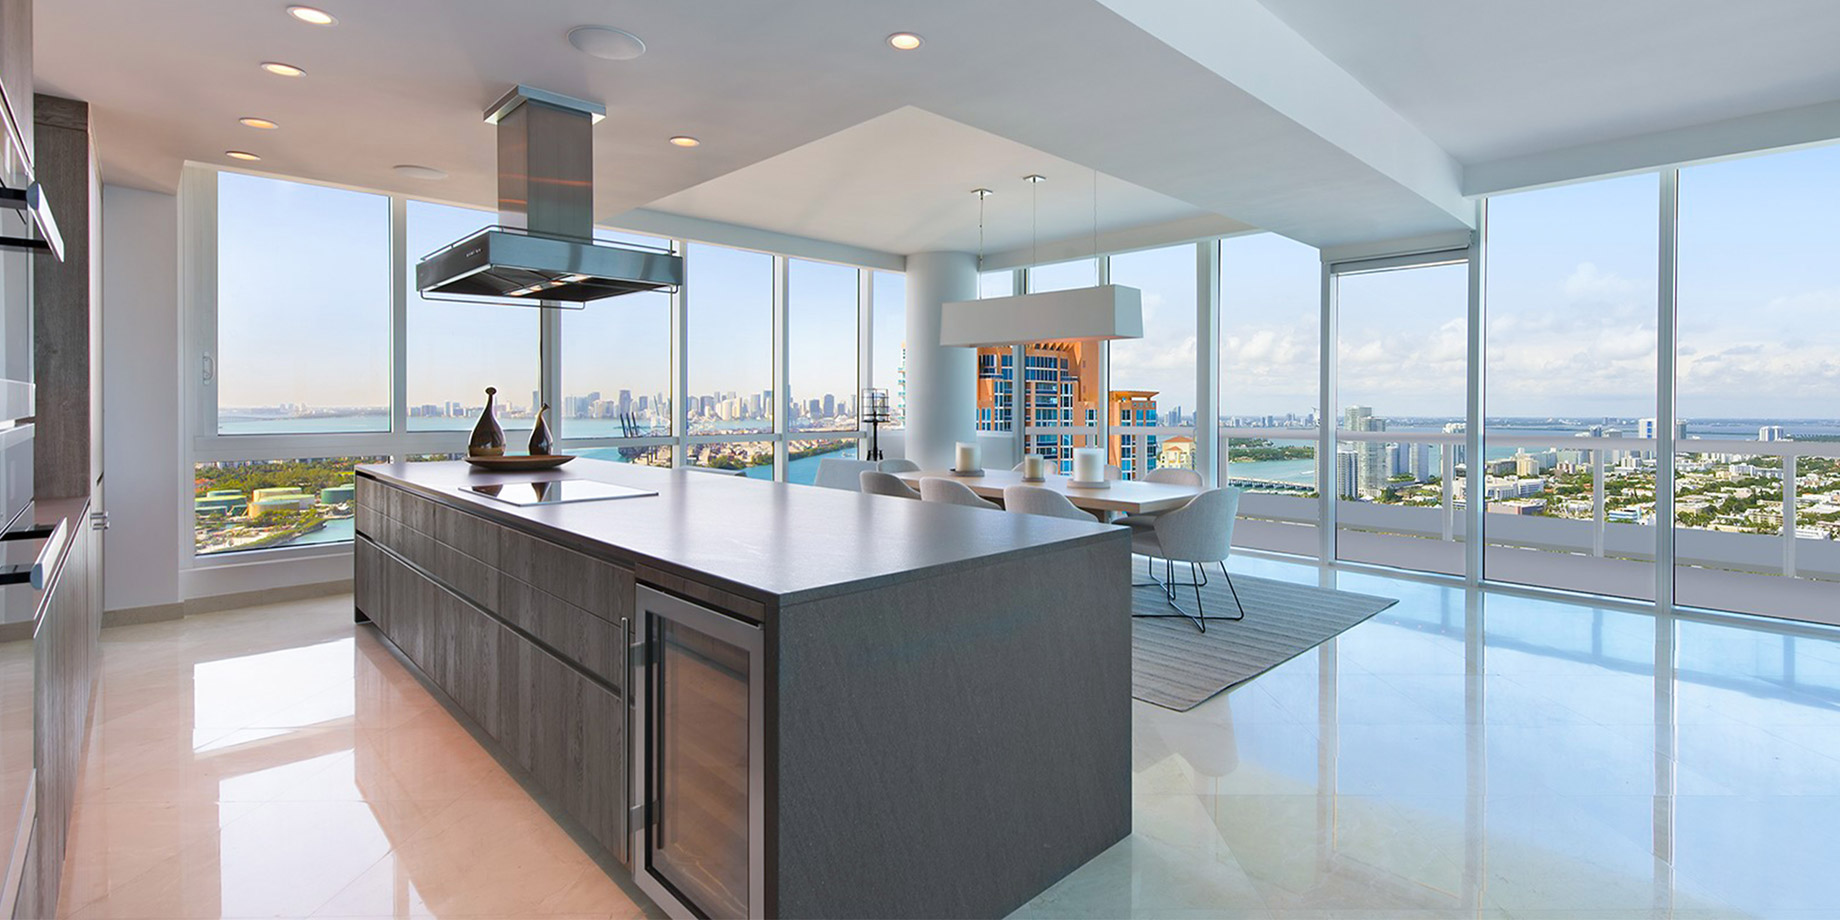 Kitchen and Living Room – Continuum Luxury Condos – South Beach, Miami, Florida